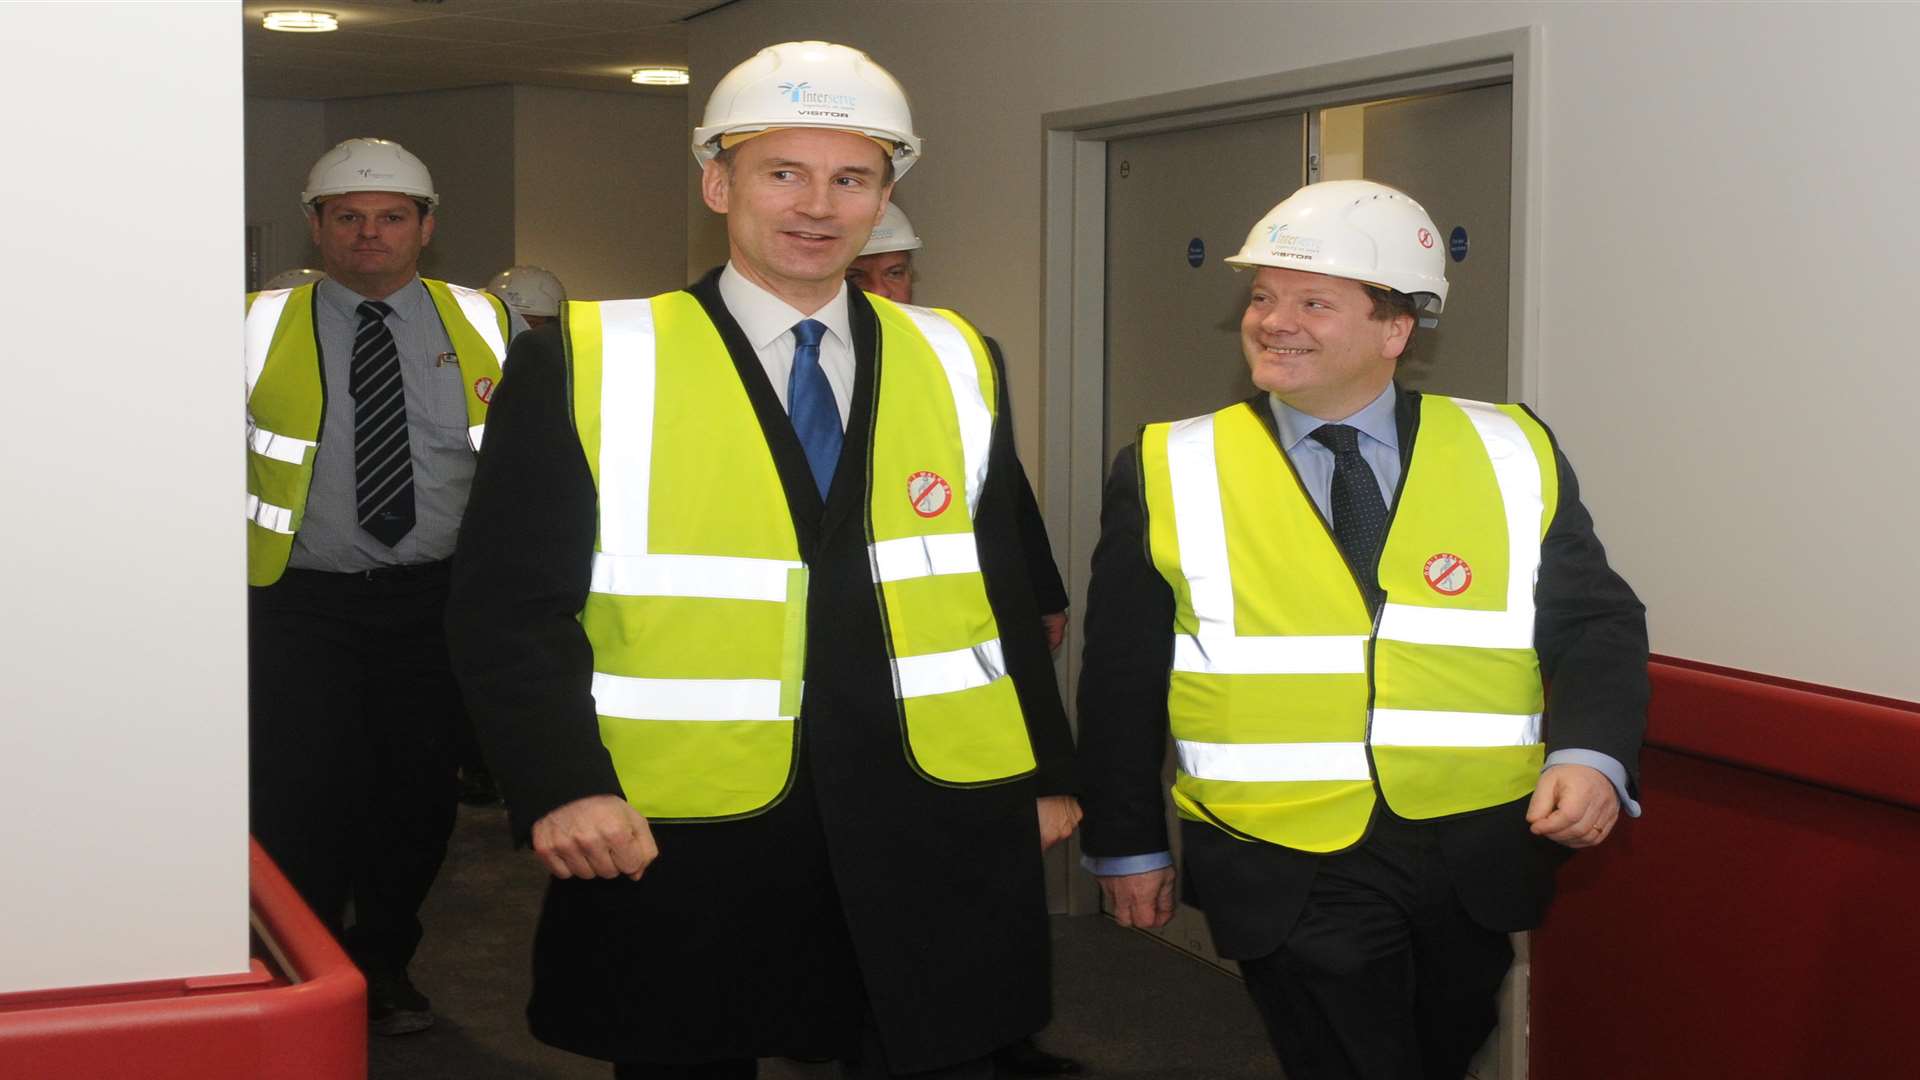 Health Secretary Jeremy Hunt and MP Charlie Elphicke touring the hospital last year